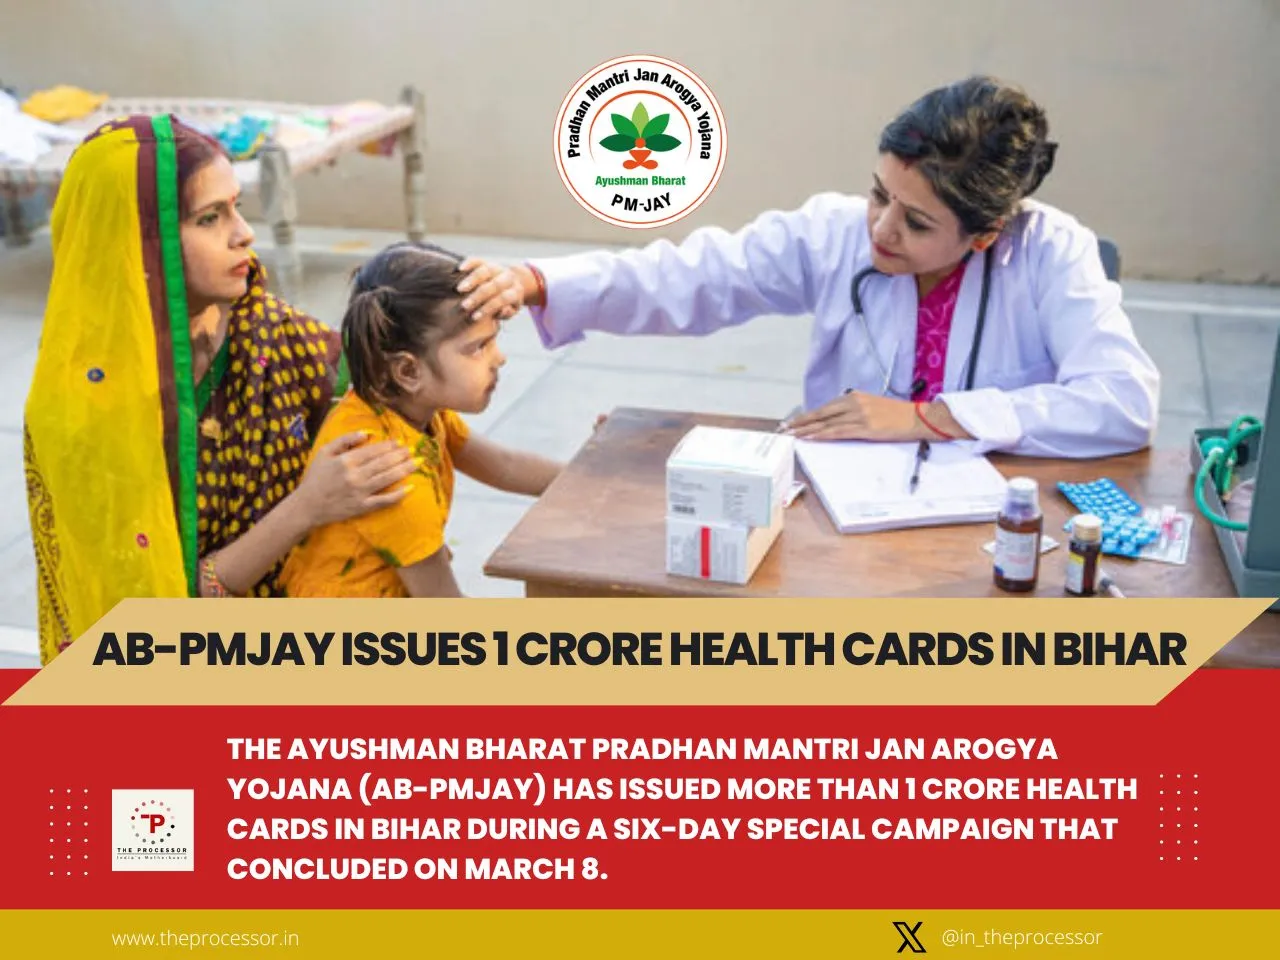 Ayushman Bharat: Bihar Issues Over 1 Crore Health Cards in 6 Days